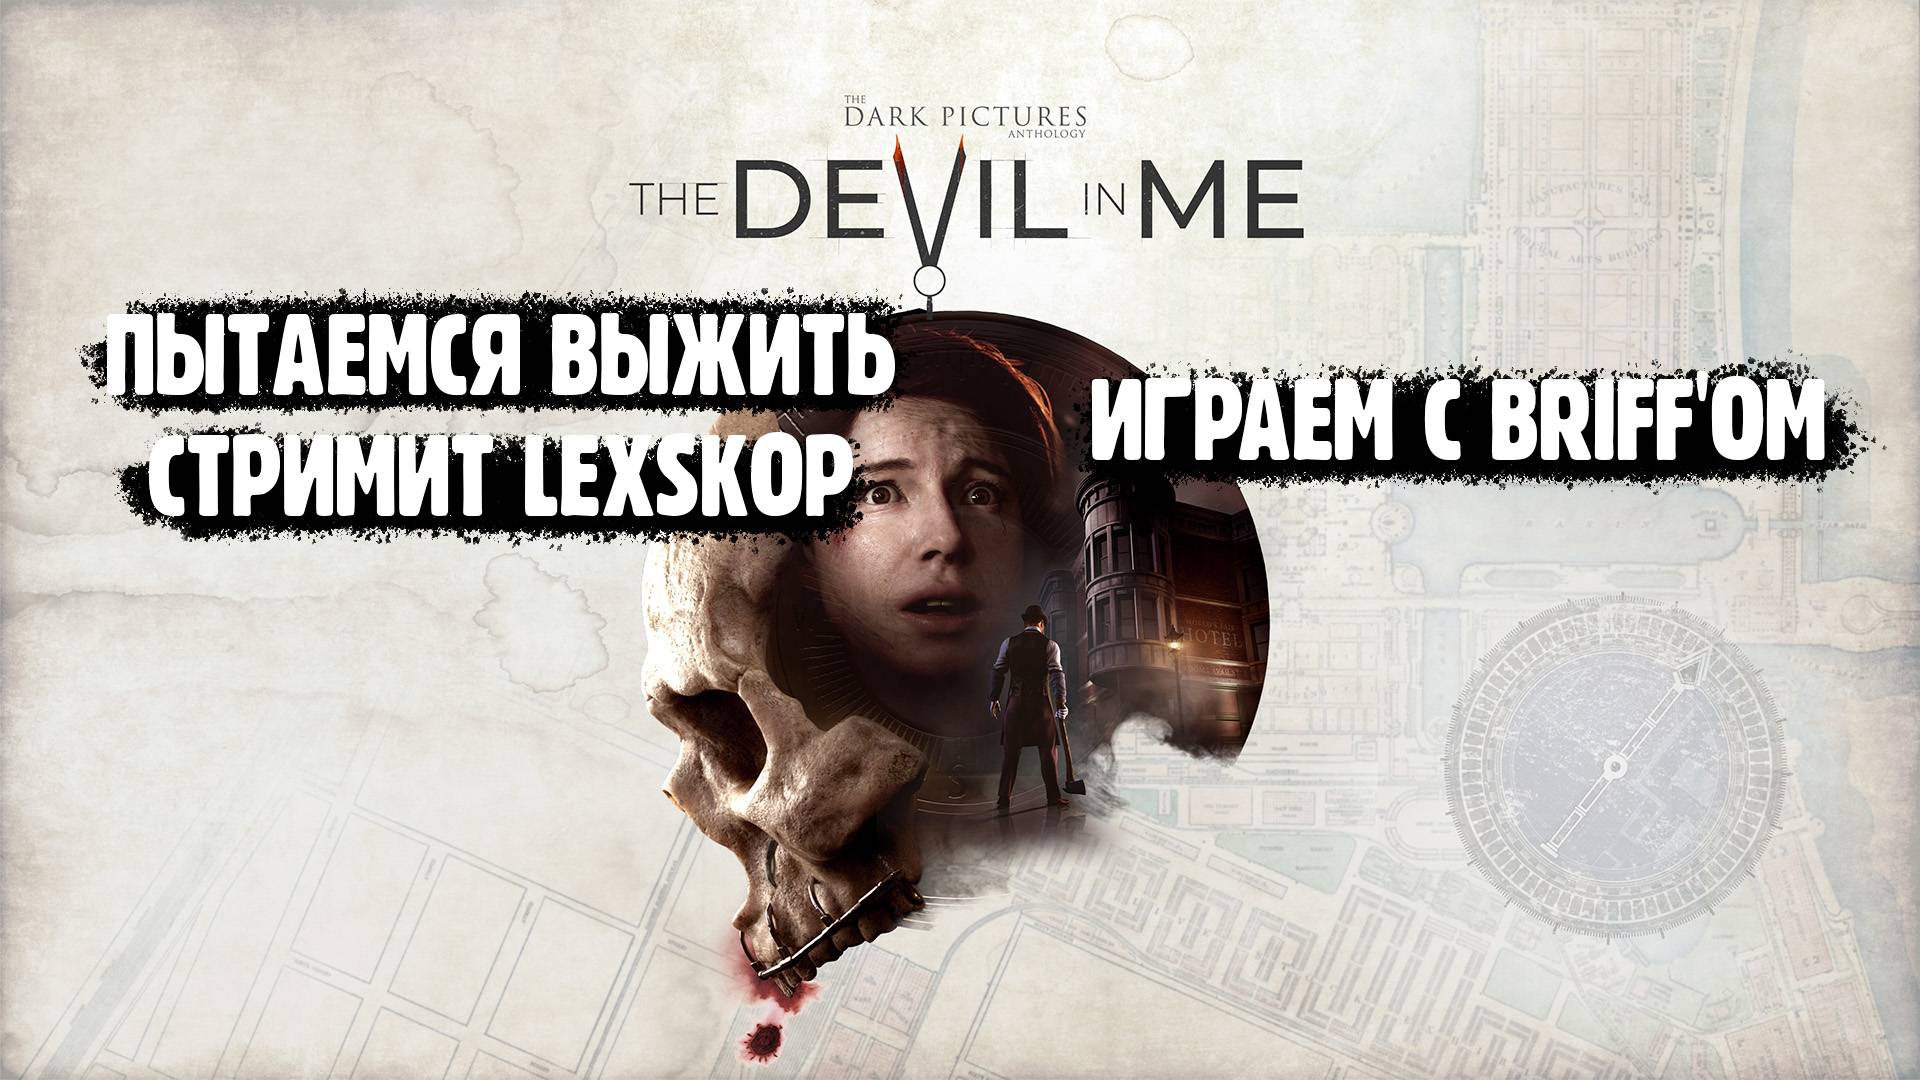 The Dark Pictures Anthology: The Devil in Me | Время офигительных историй:) Проходим с @Briff